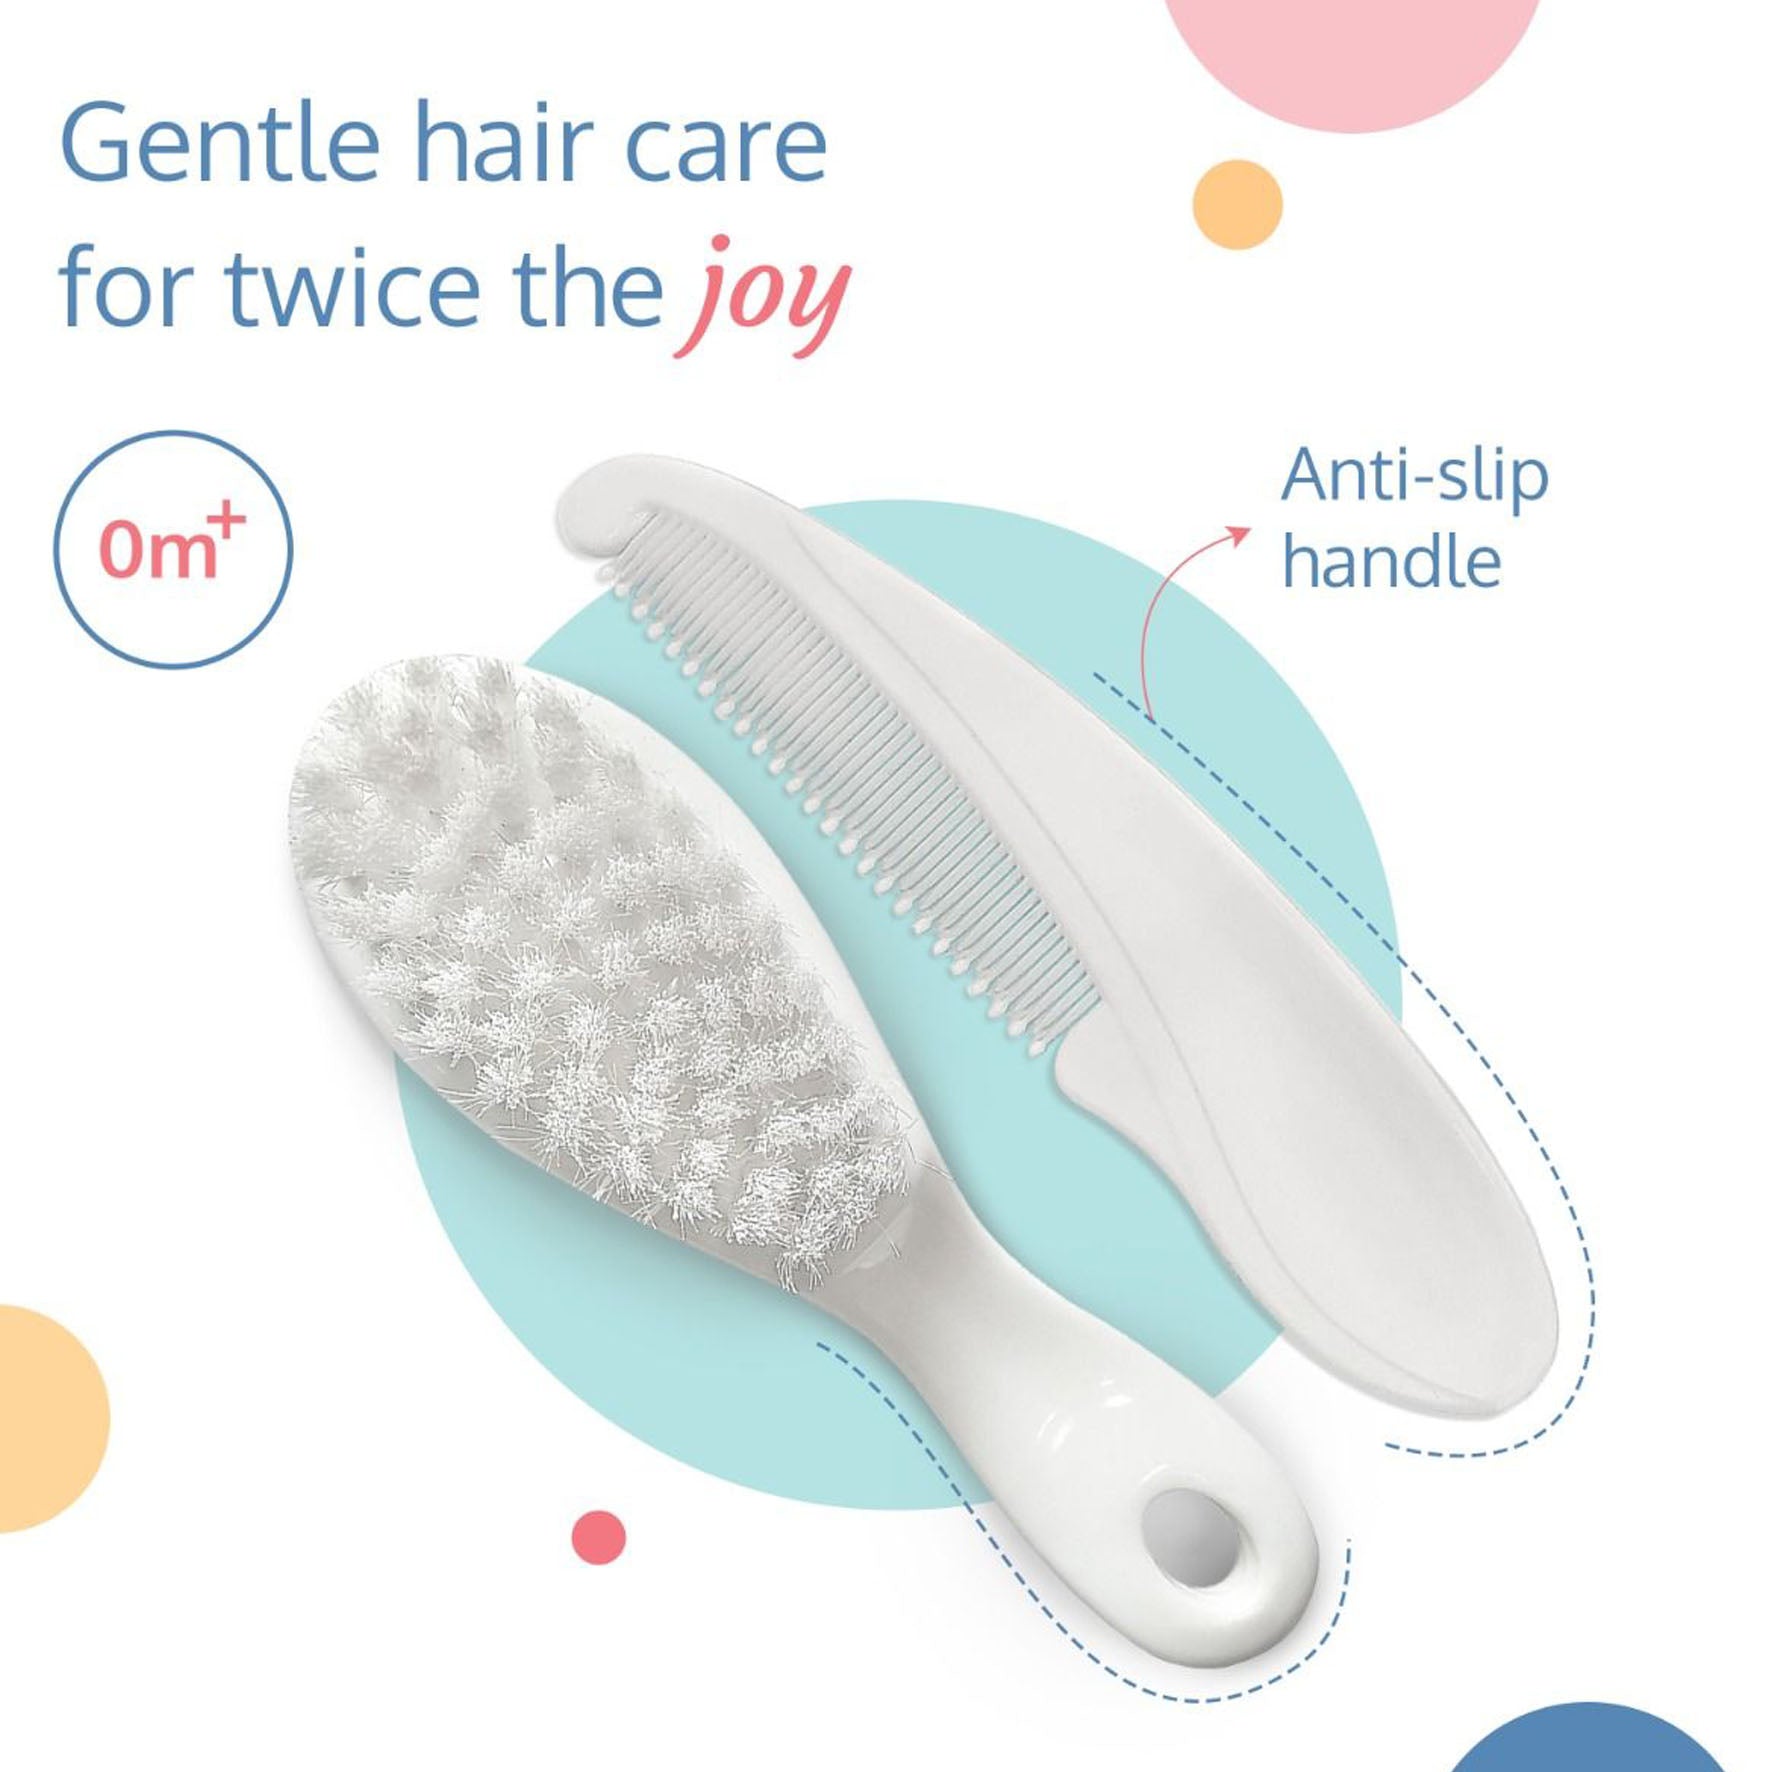 LuvLap Elegant Baby Comb Brush Set - With Soft Bristles, White, 2 pcs